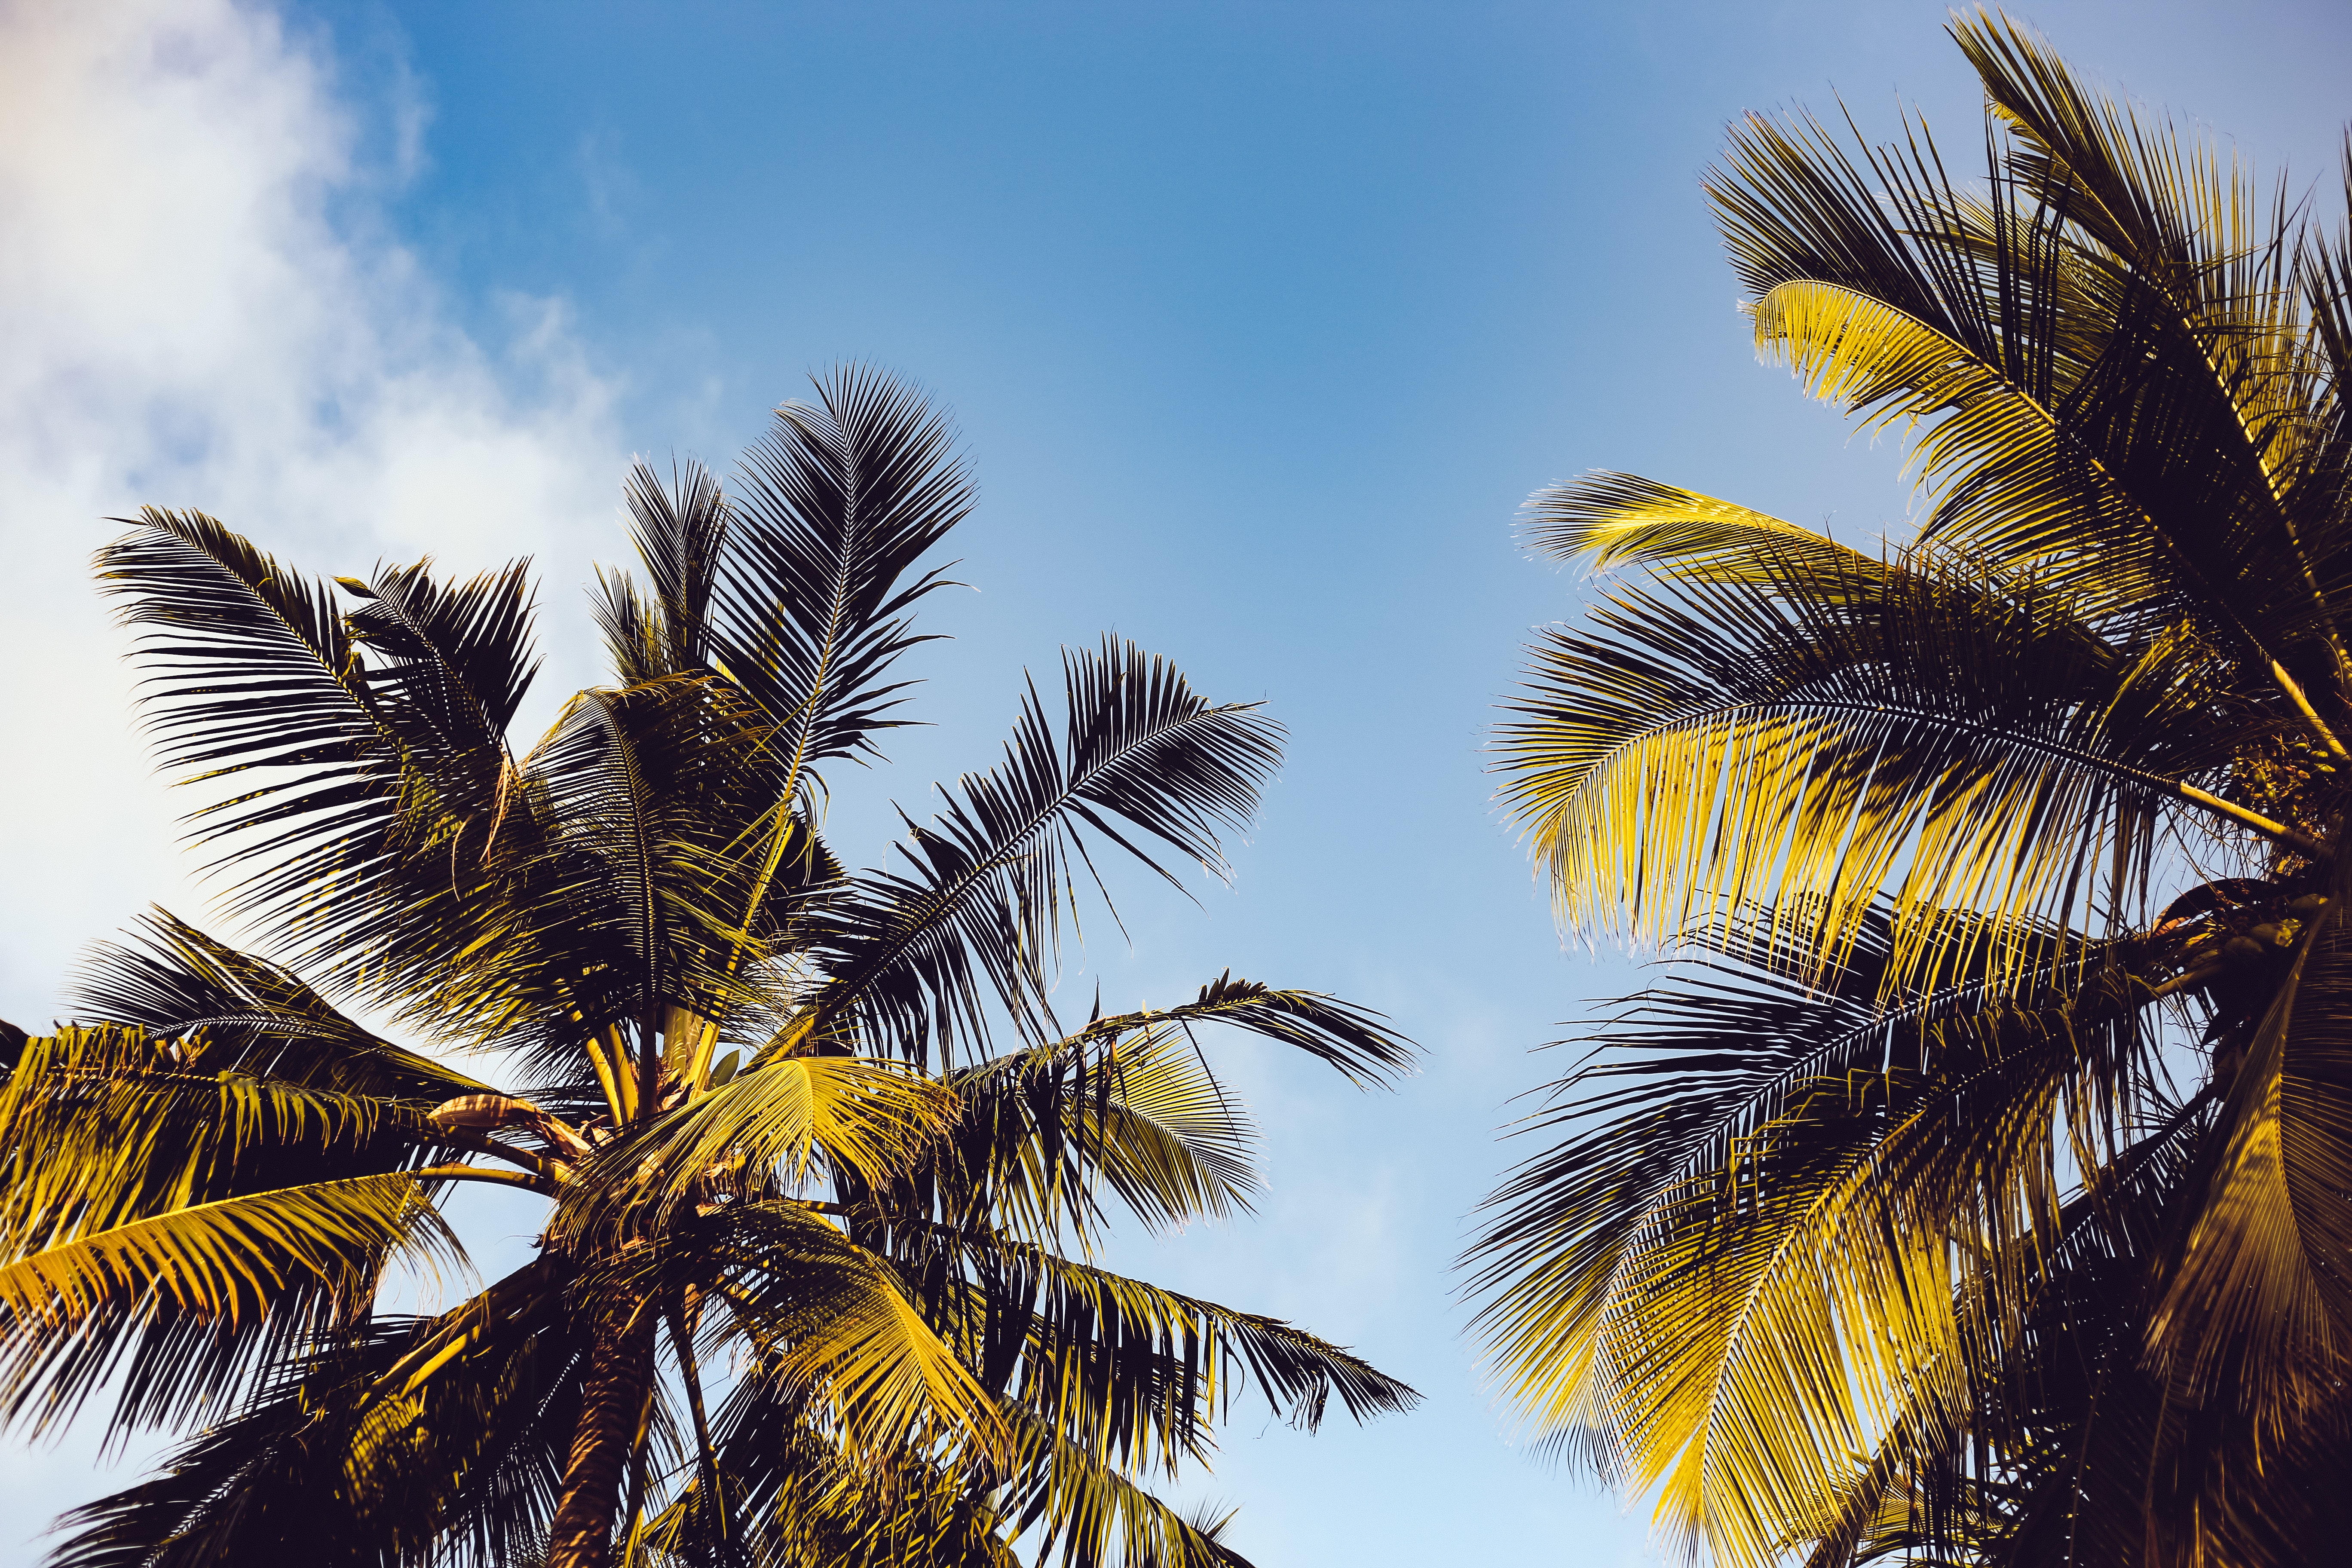 1000+ Interesting Palm Trees Photos · Pexels · Free Stock Photos